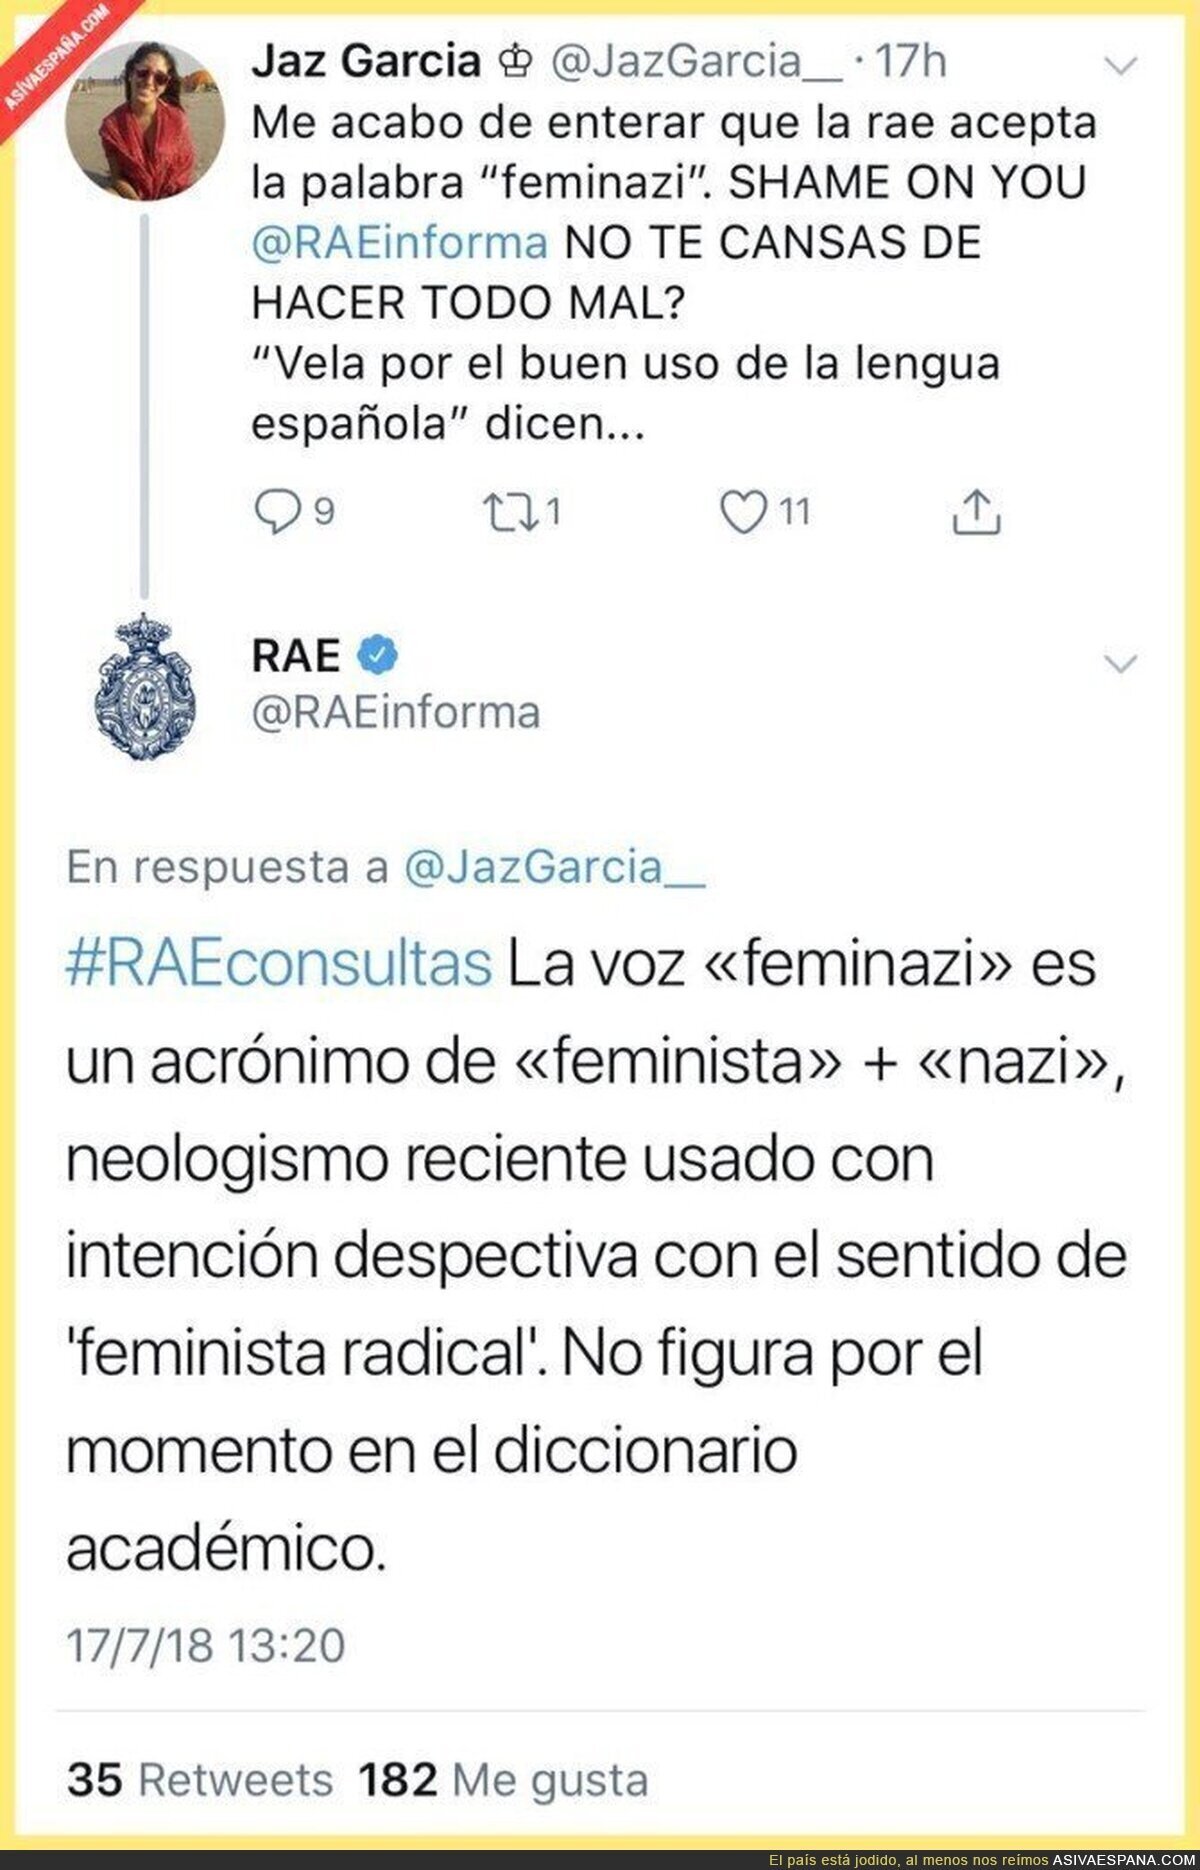 La respuesta de la RAE ante la palabra "feminazi"